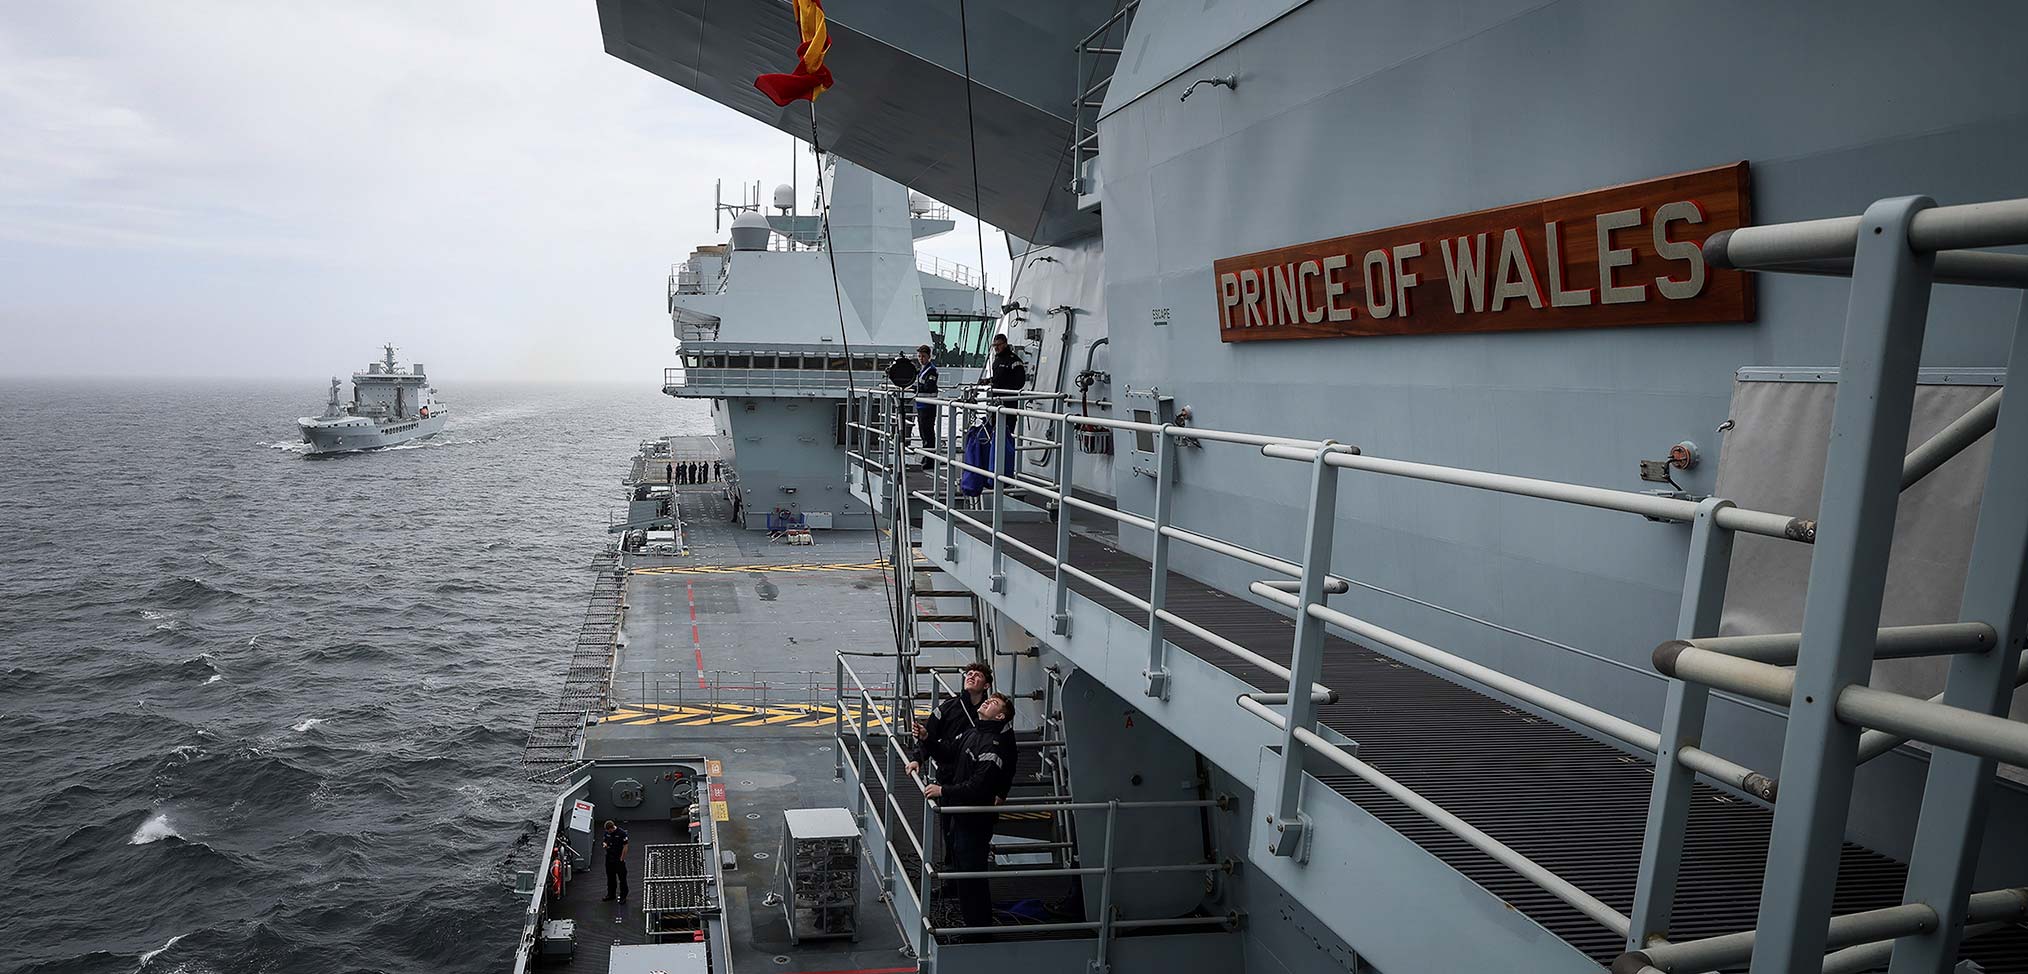 HMS Prince of Wales into the spotlight